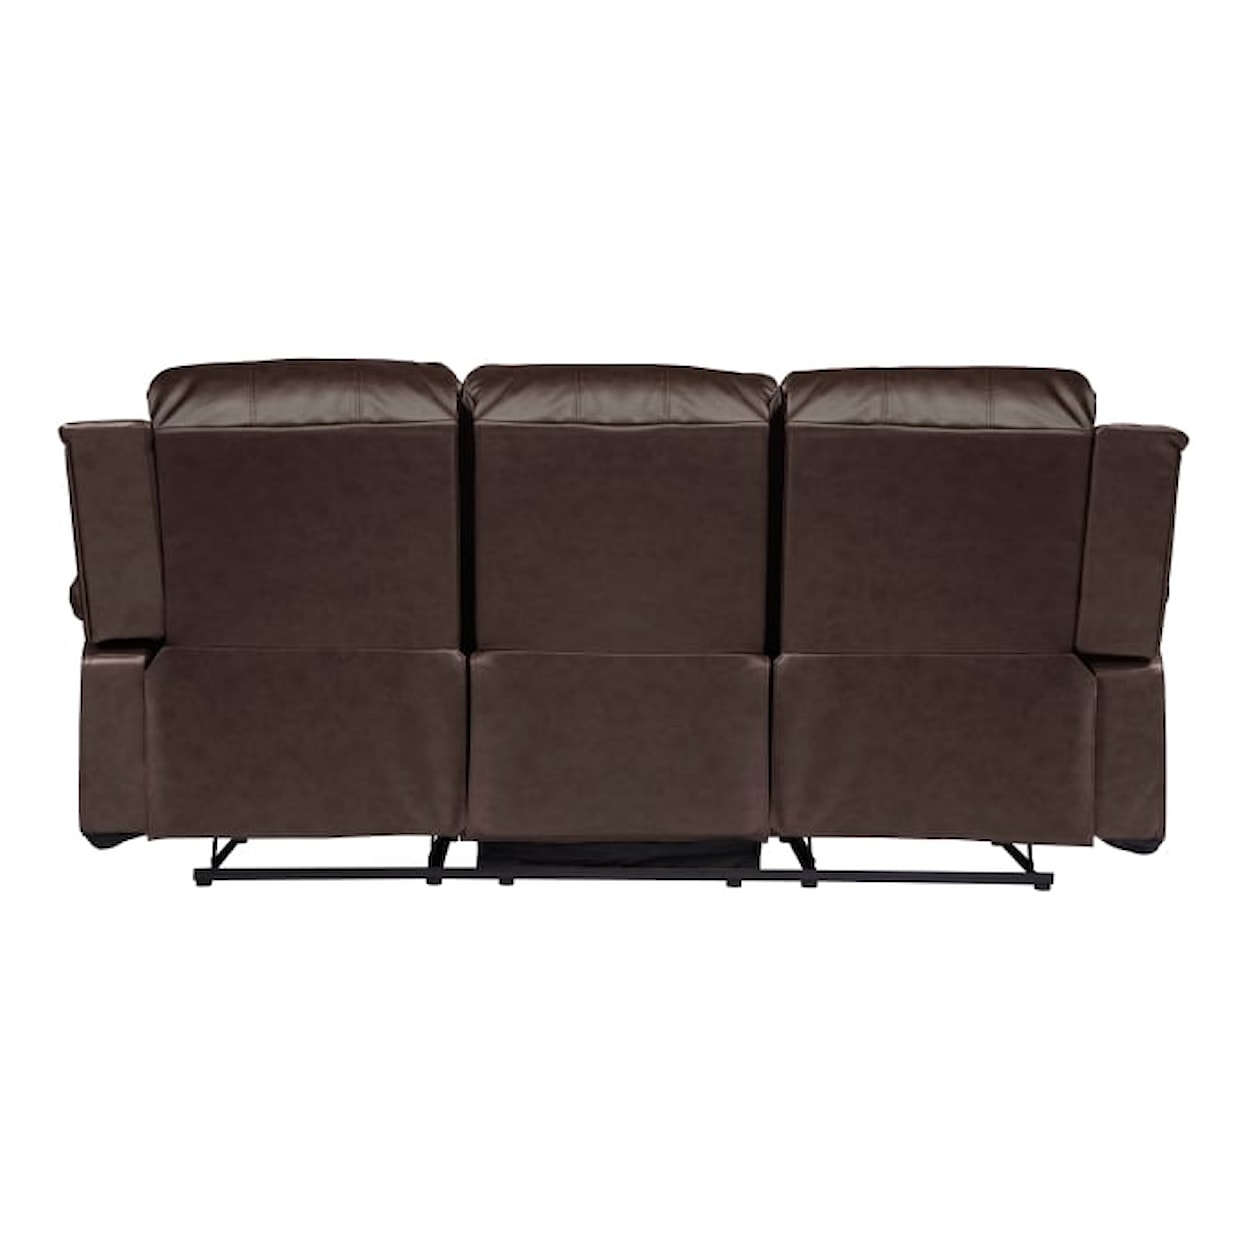 Homelegance Furniture Cranley Double Reclining Sofa